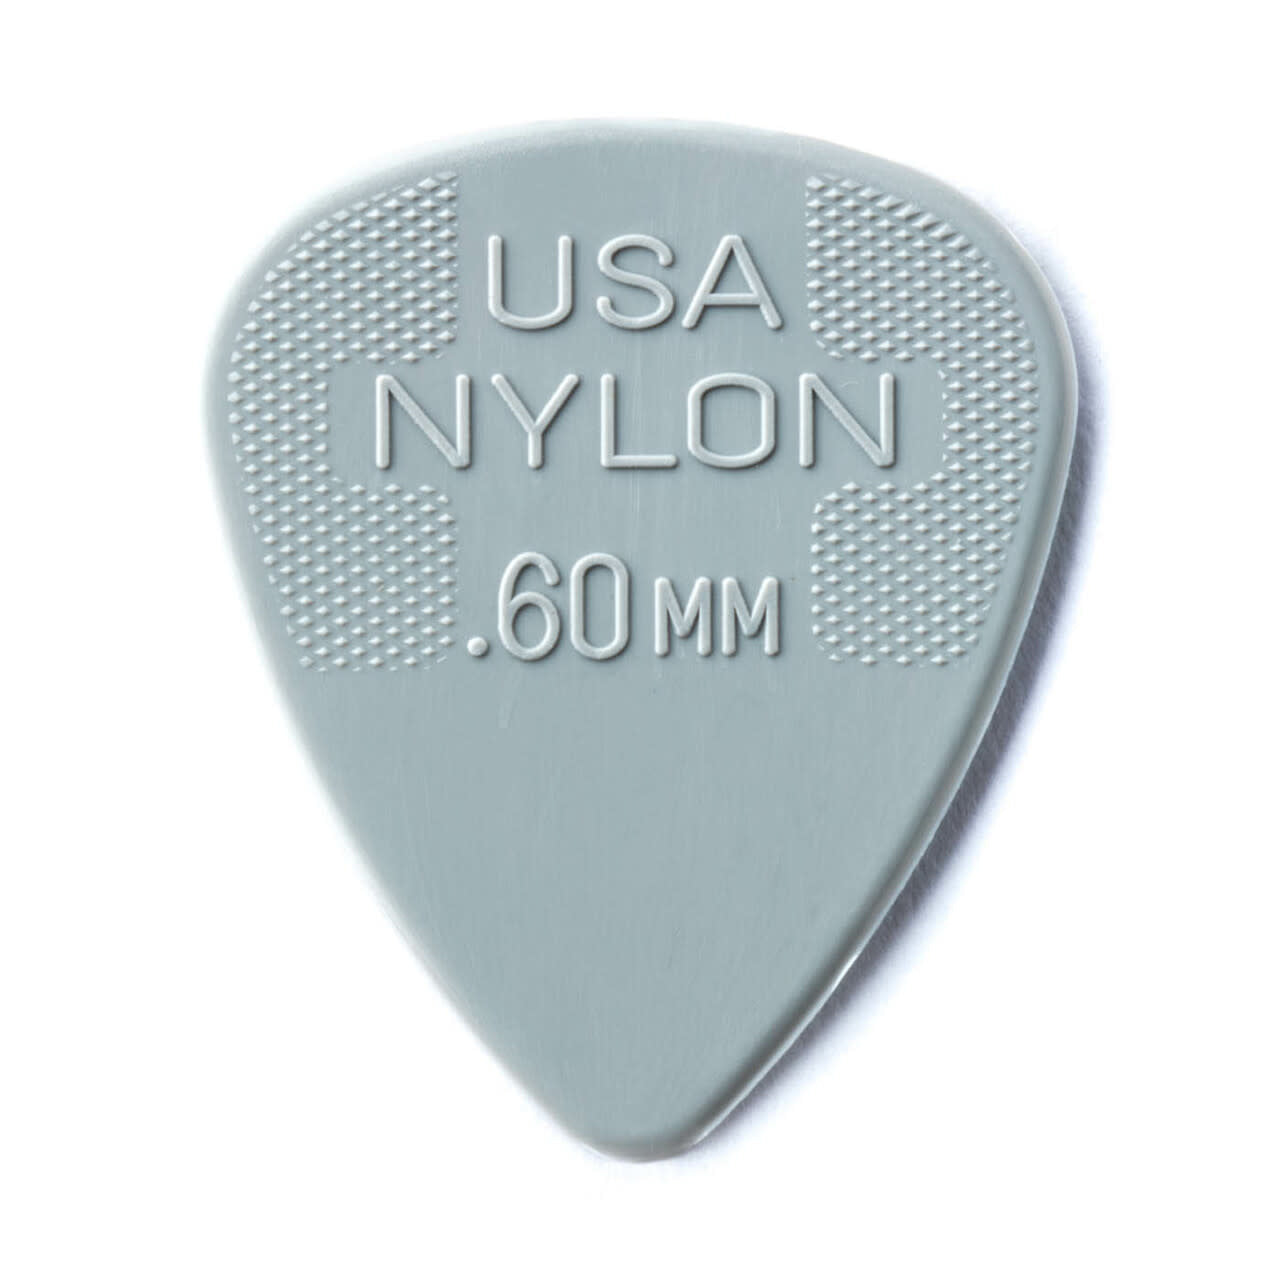 Dunlop Nylon Standard Pick .60mm 44-060 12 Pack